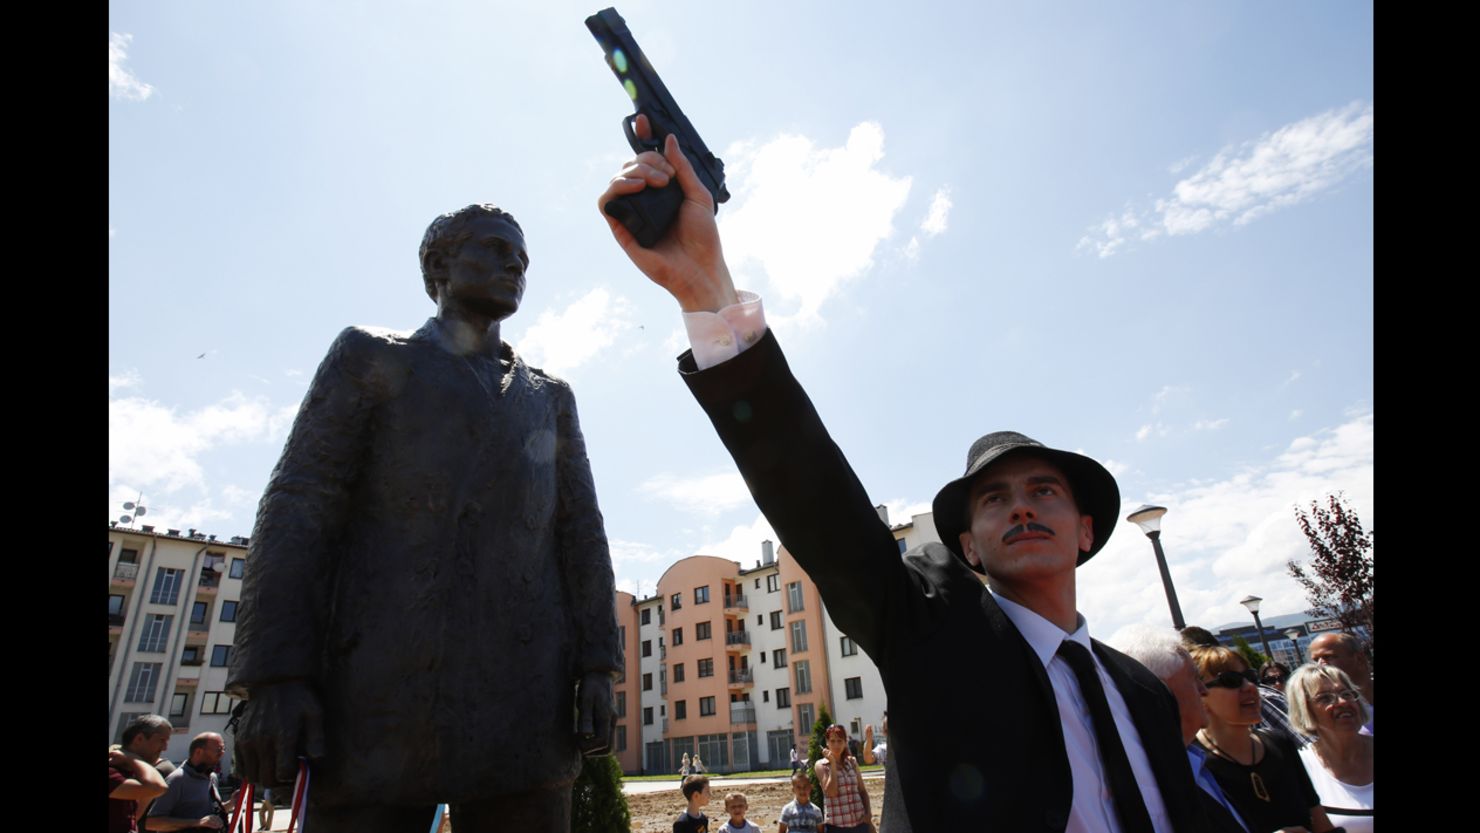 Bosnian actor Jovan Mojsilovic poses with a plastic gun replica at the unveiling of a statue of Gavrilo Princip in Sarajevo, June 27.